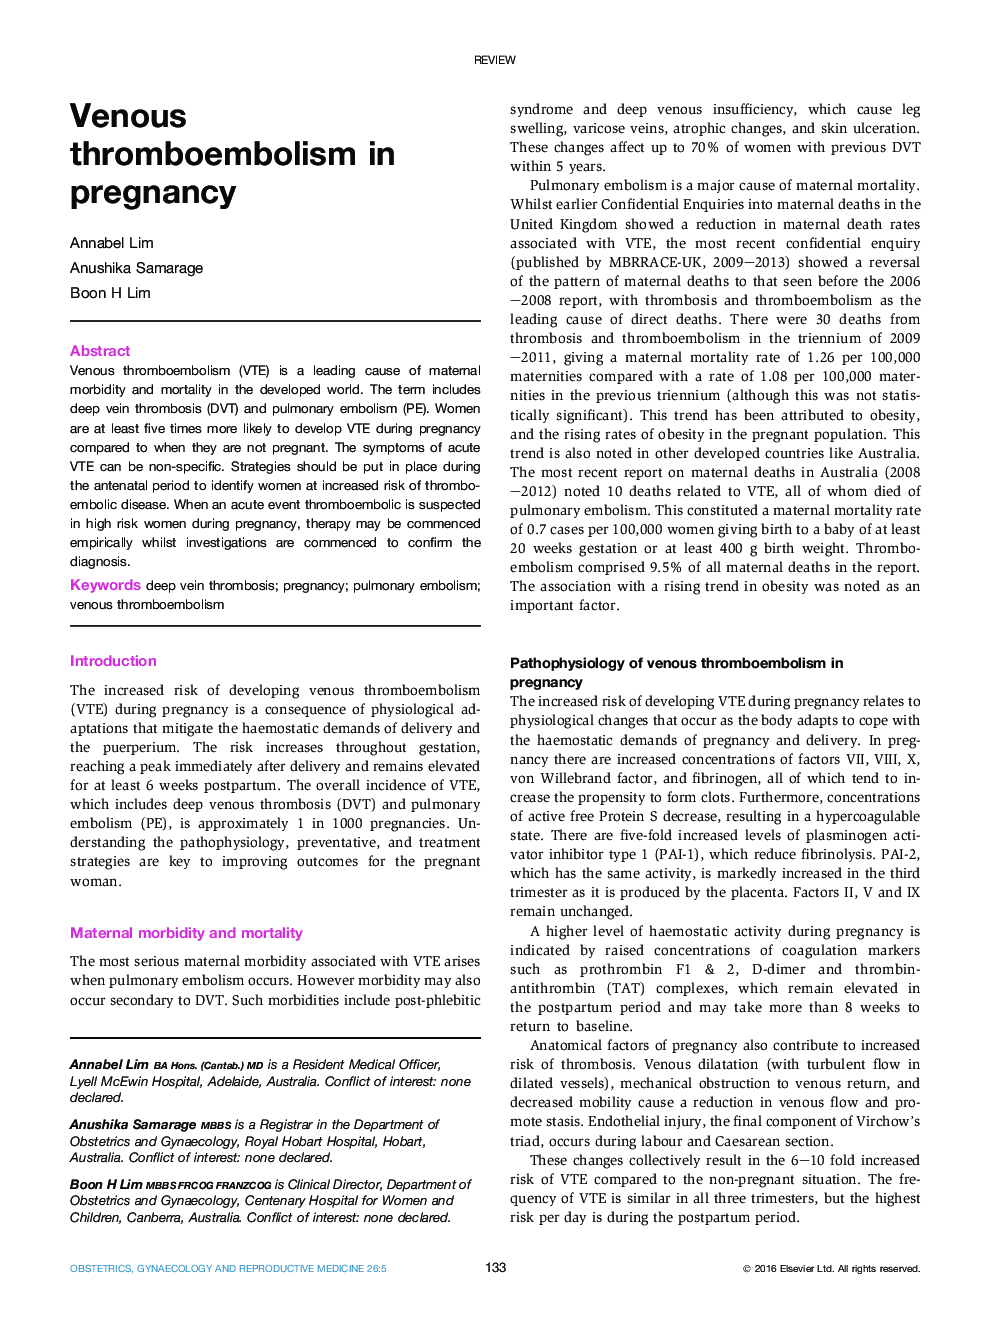 Venous thromboembolism in pregnancy